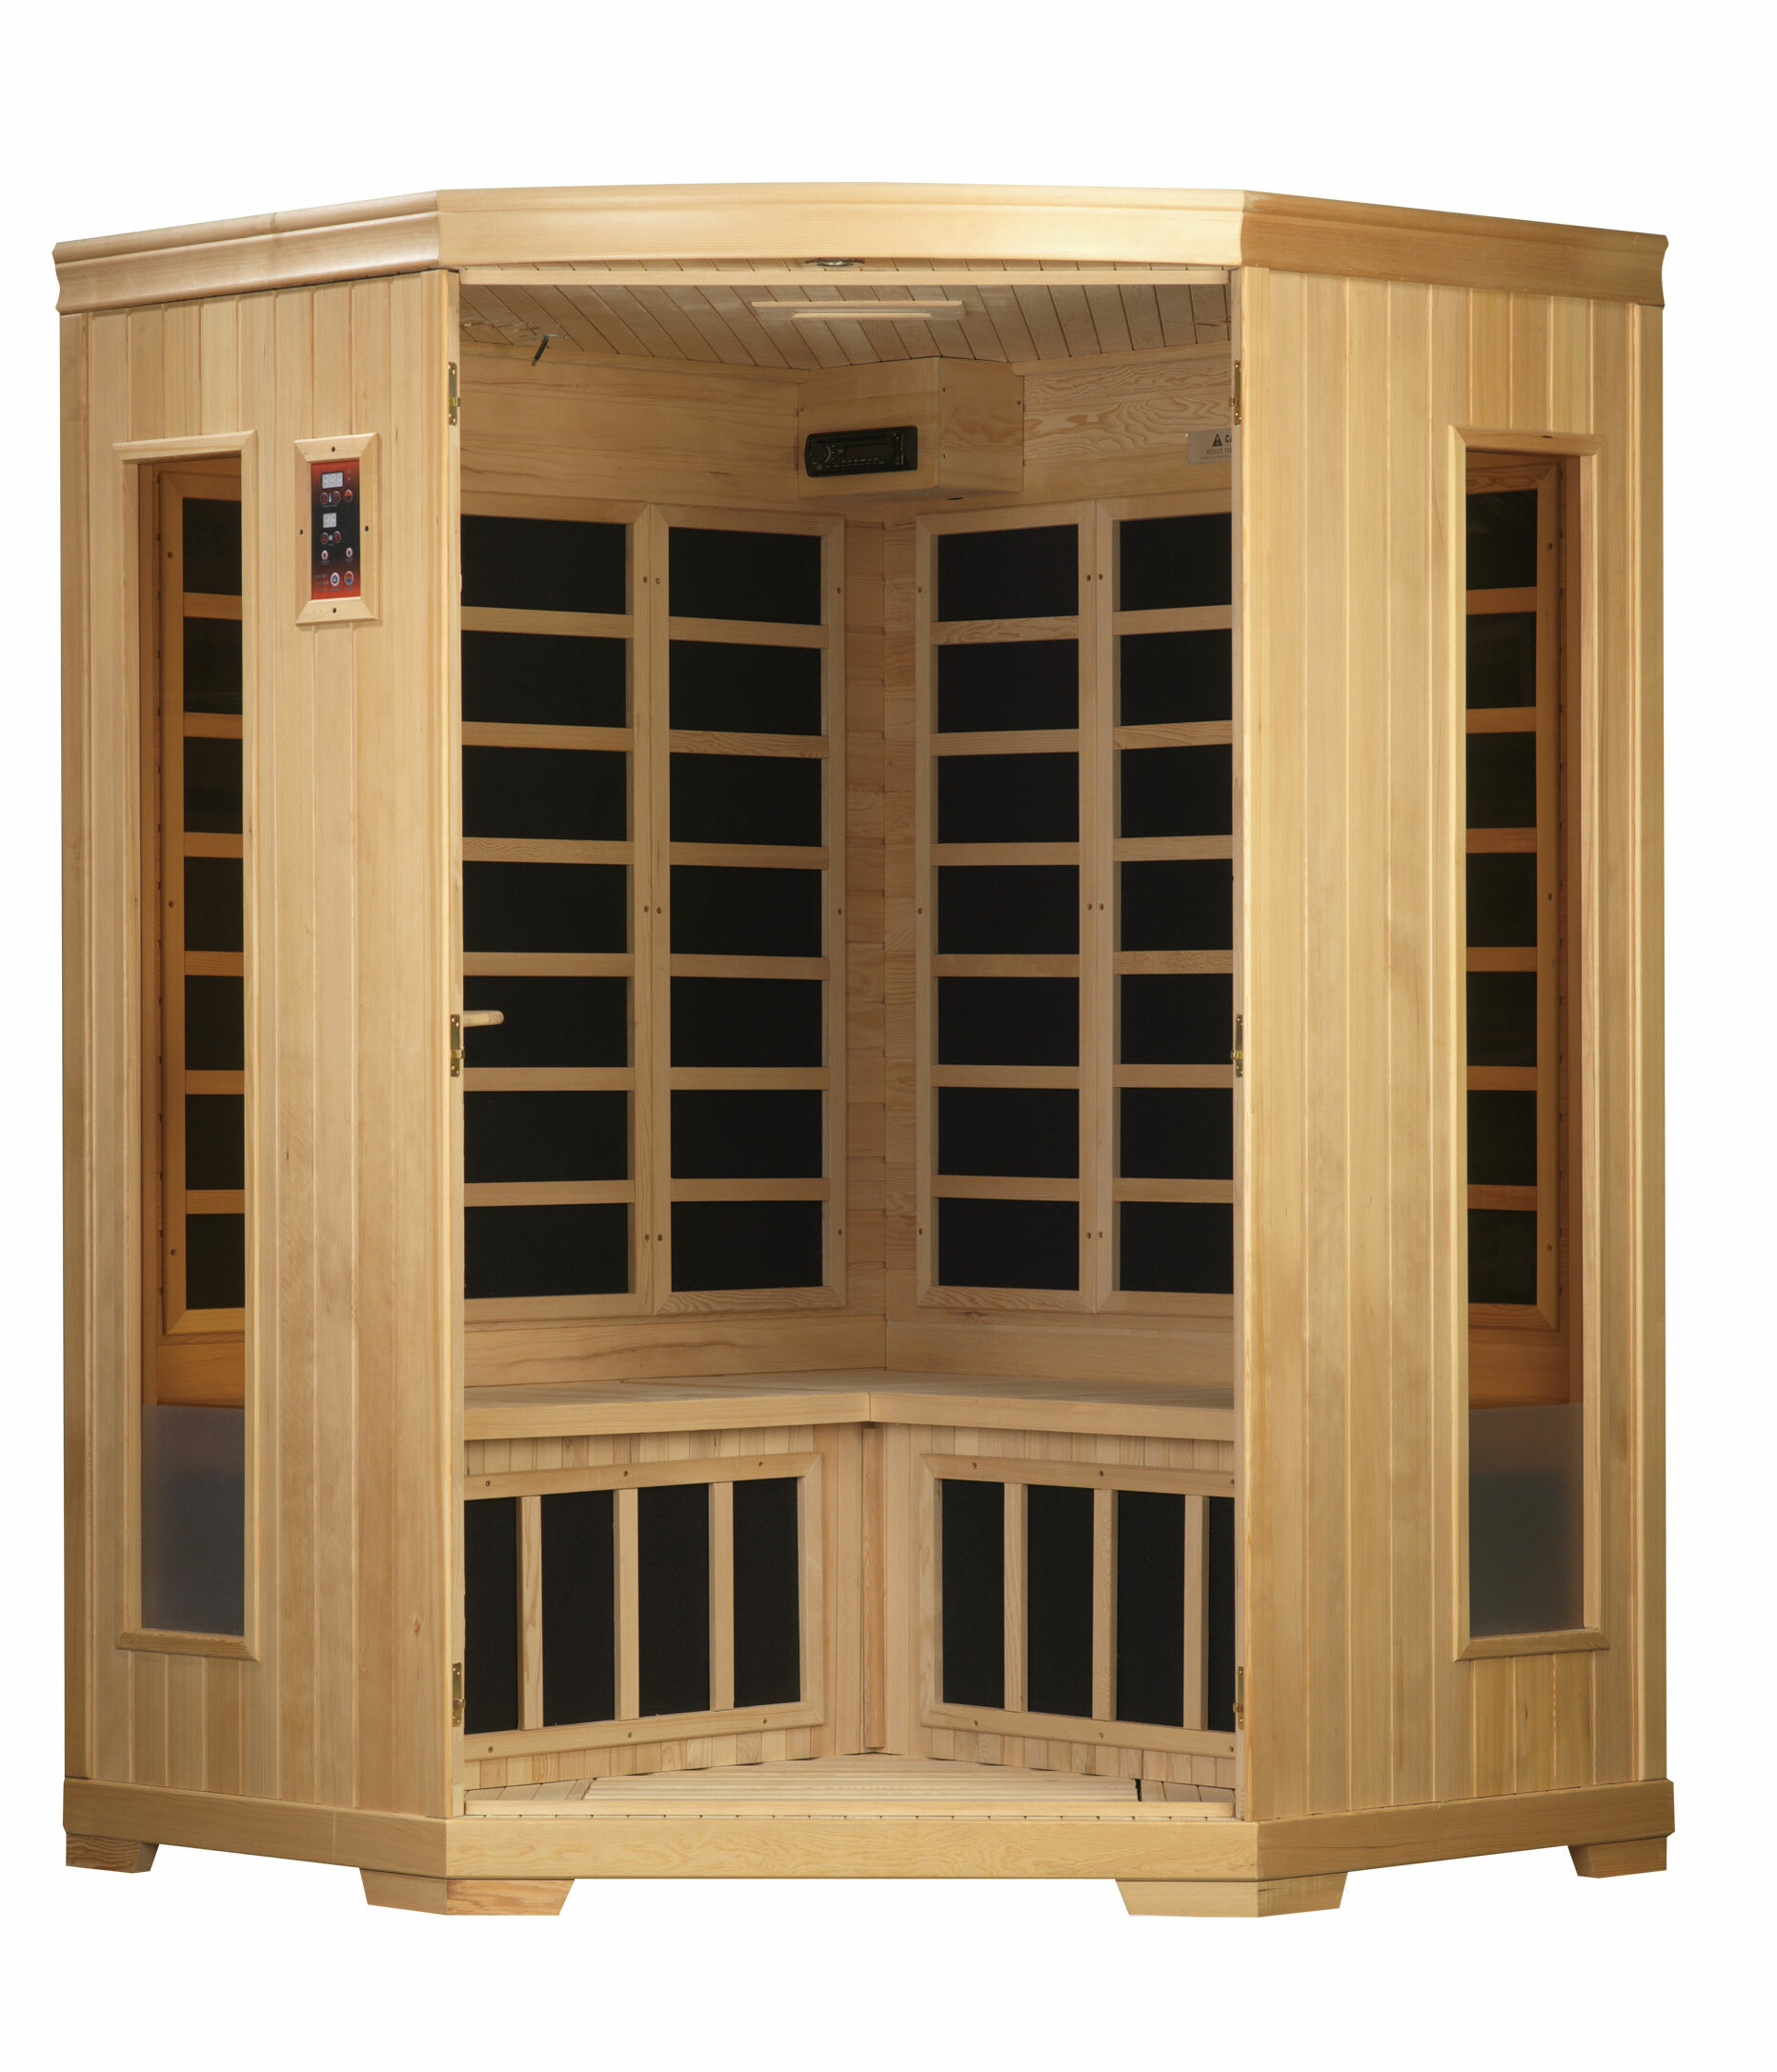 Wellform Sauna Shaper • Home Shopping Selections